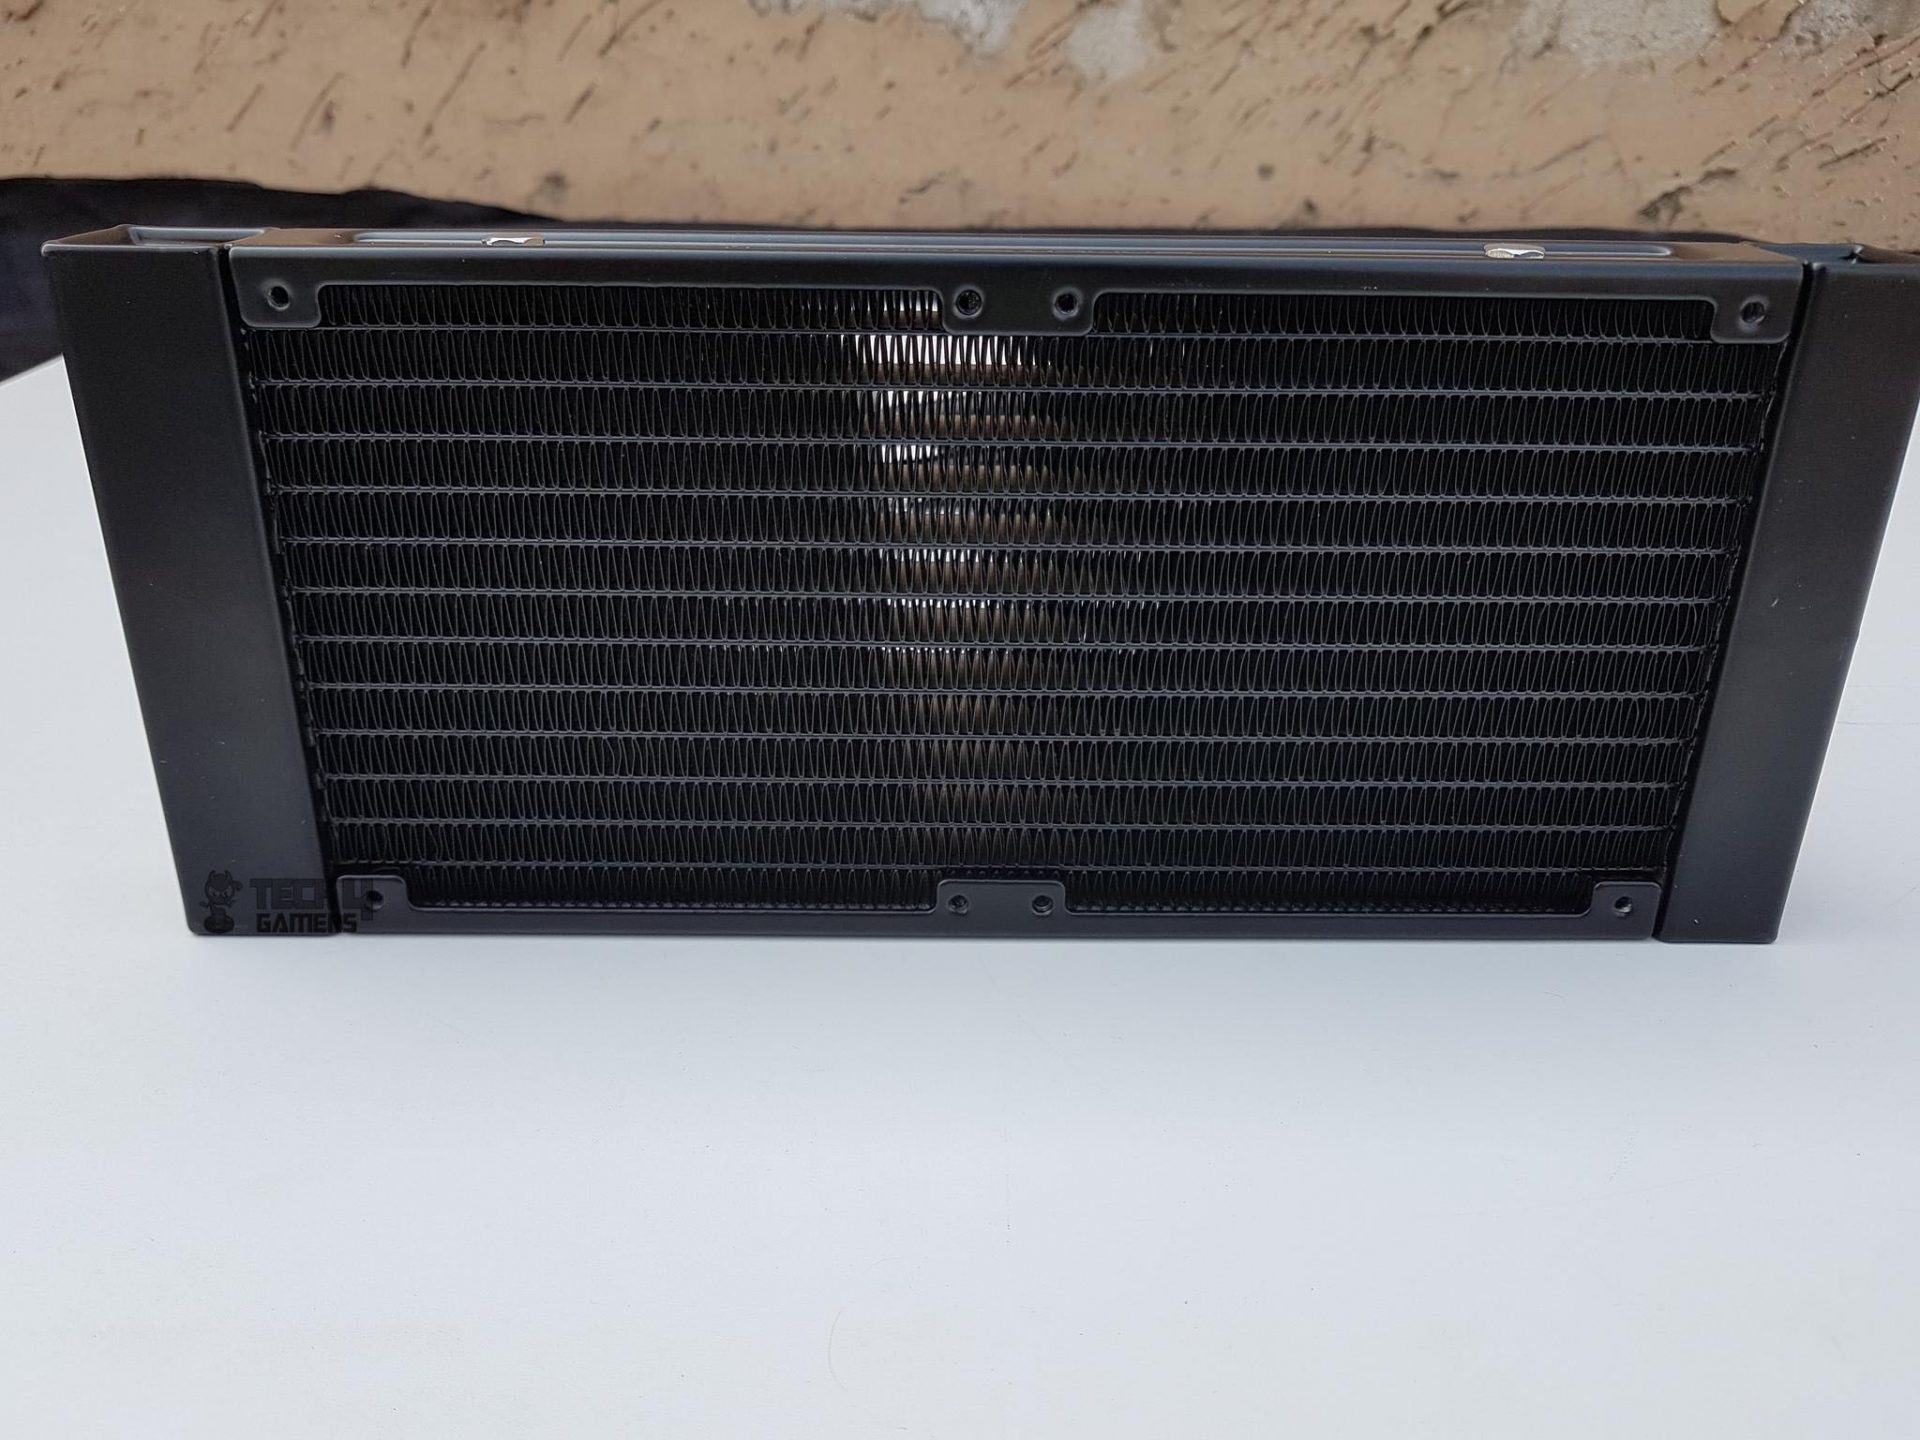 Deepcool Captain 240 Pro CPU Liquid Cooler — The backside of the radiator